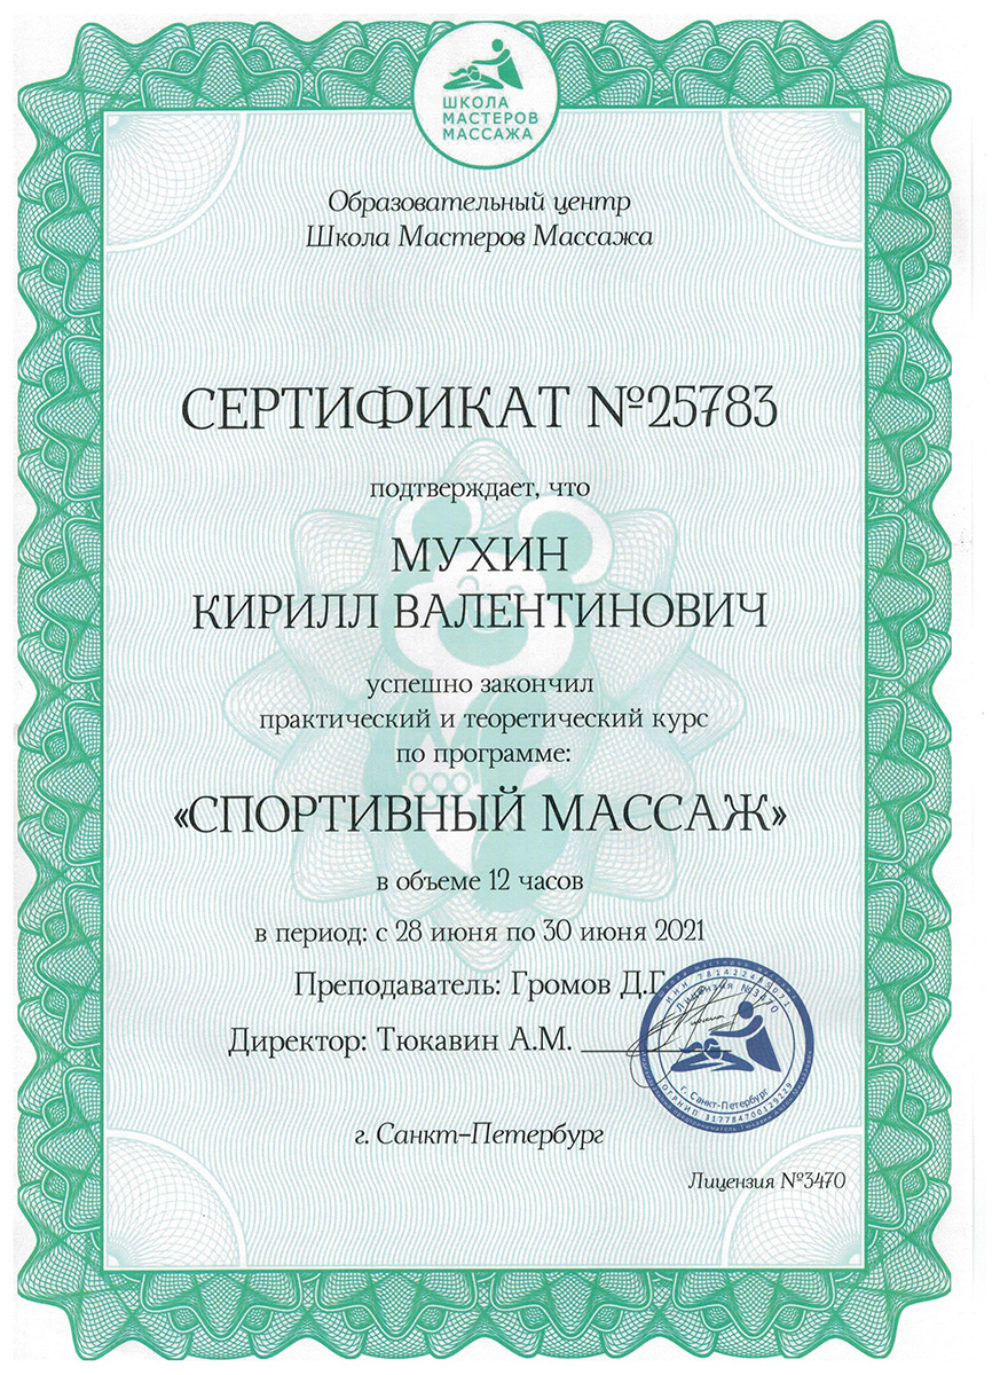 Сертификат - Курс по программе "Спортивный массаж". Мухин Кирилл Валентинович